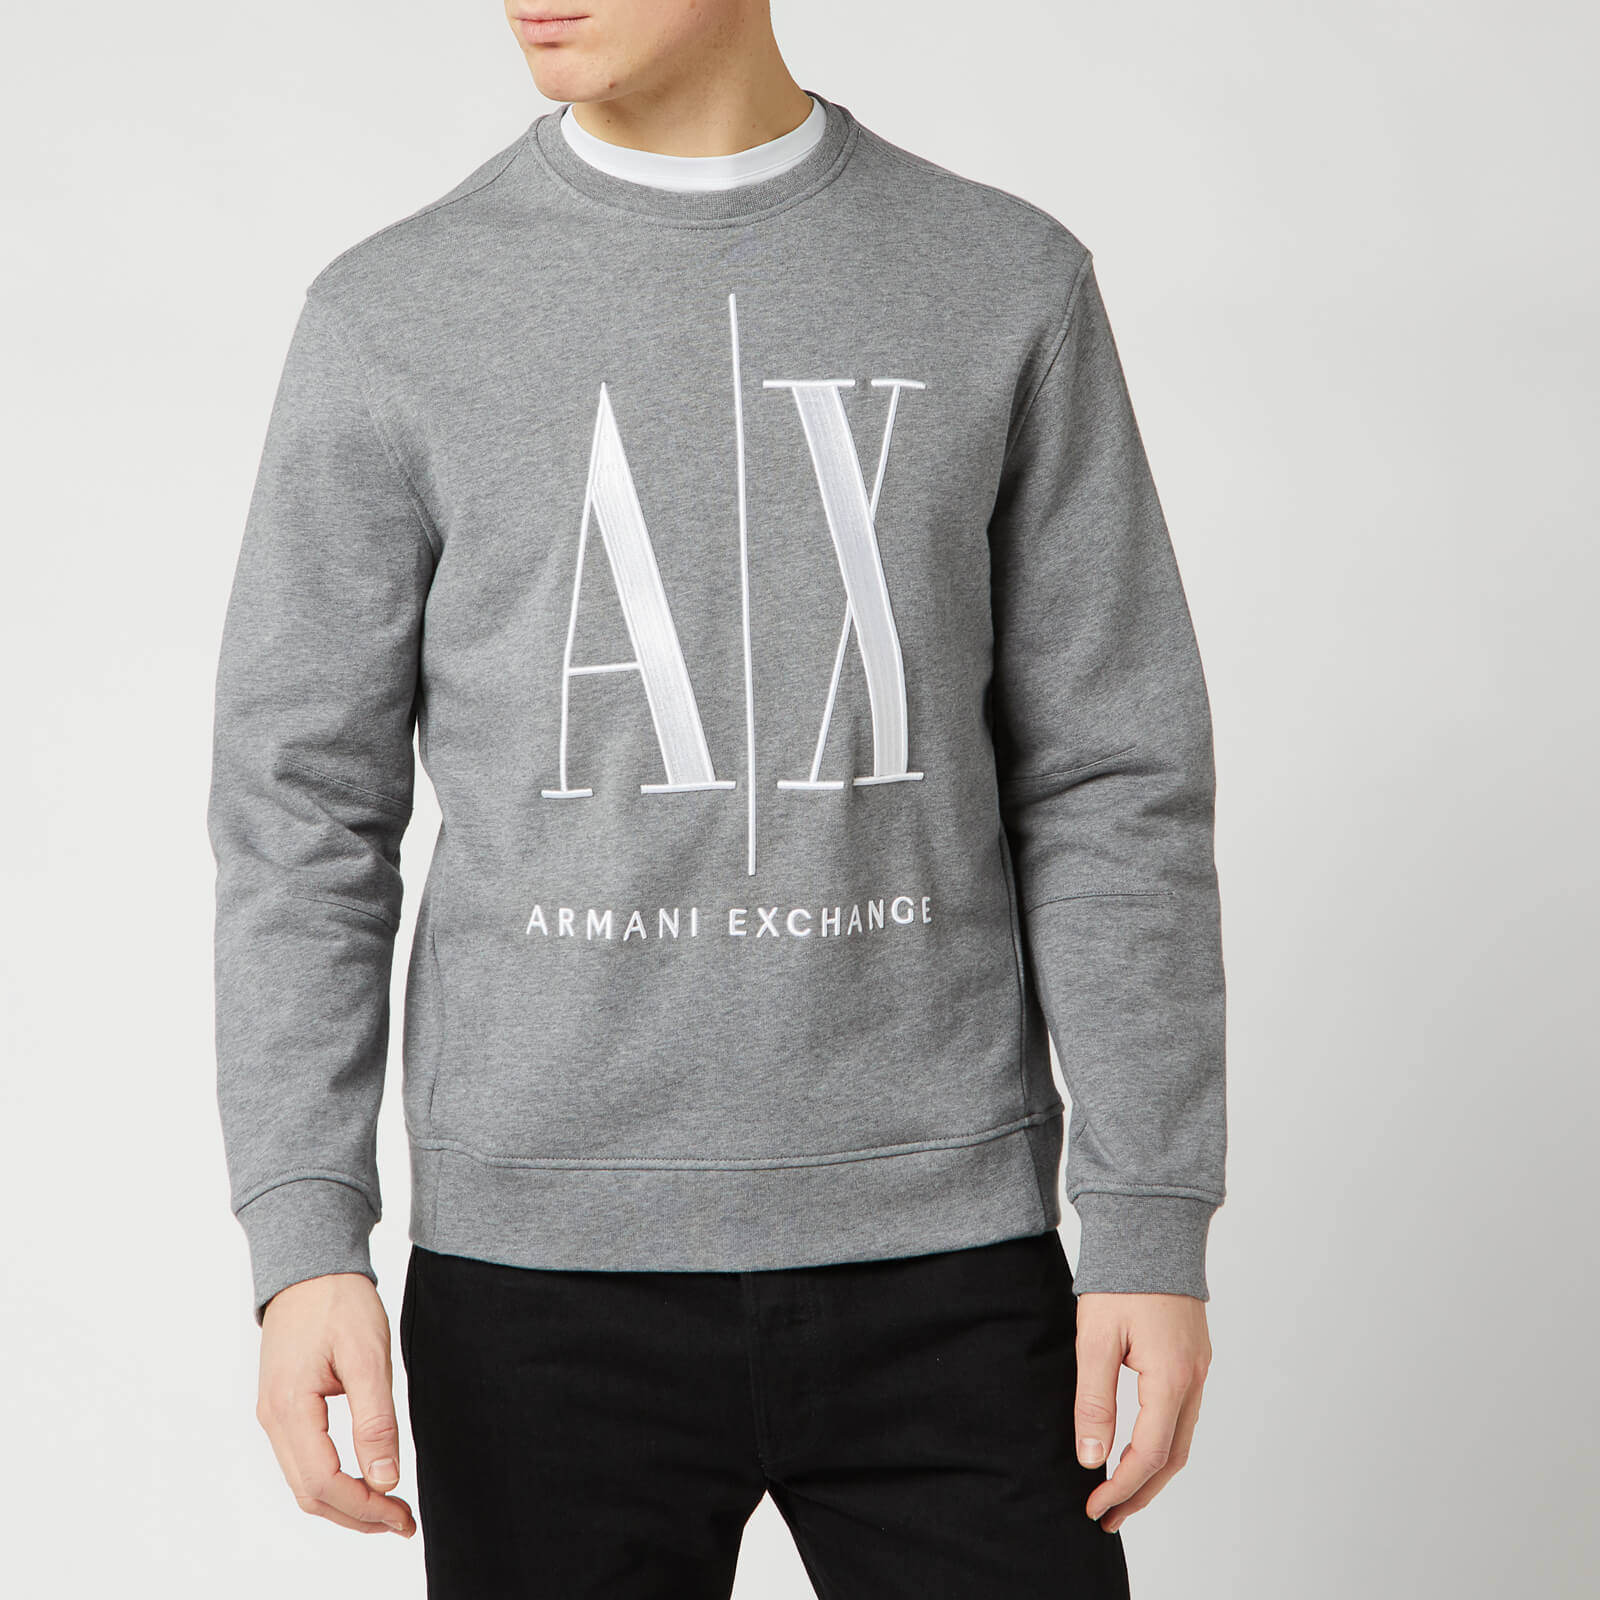 Armani Exchange Men's Big Ax Crewneck Sweatshirt - Heather Grey - S